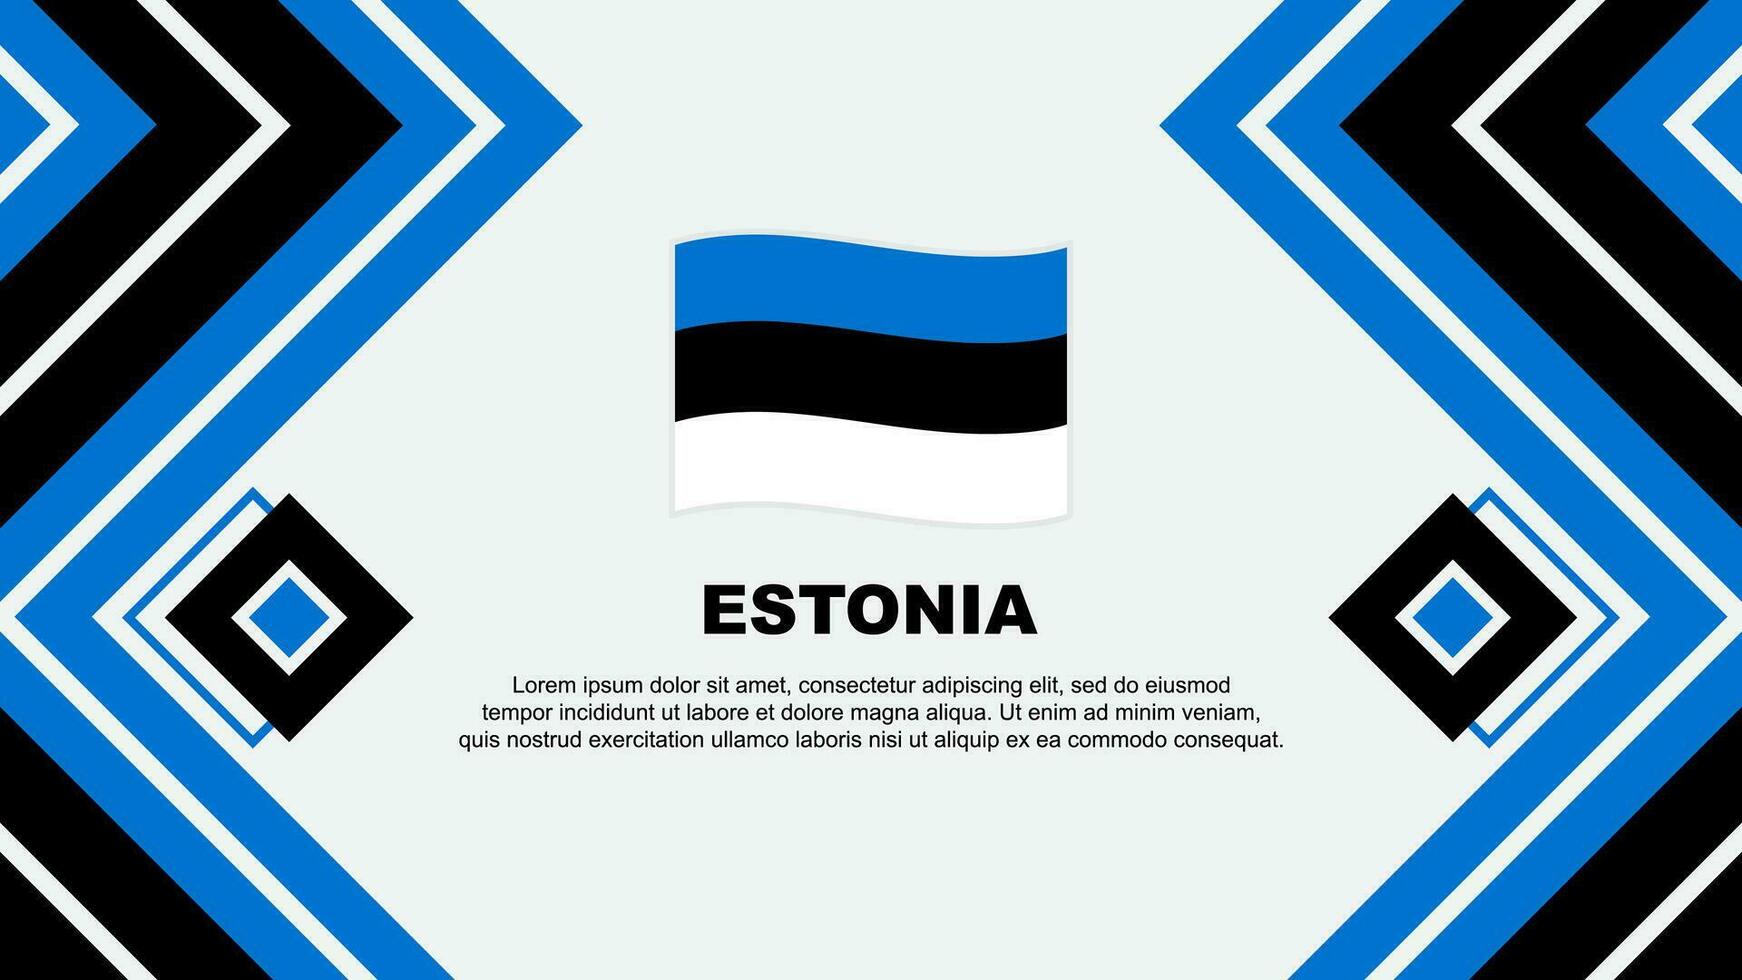 Estonia Flag Abstract Background Design Template. Estonia Independence Day Banner Wallpaper Vector Illustration. Estonia Design